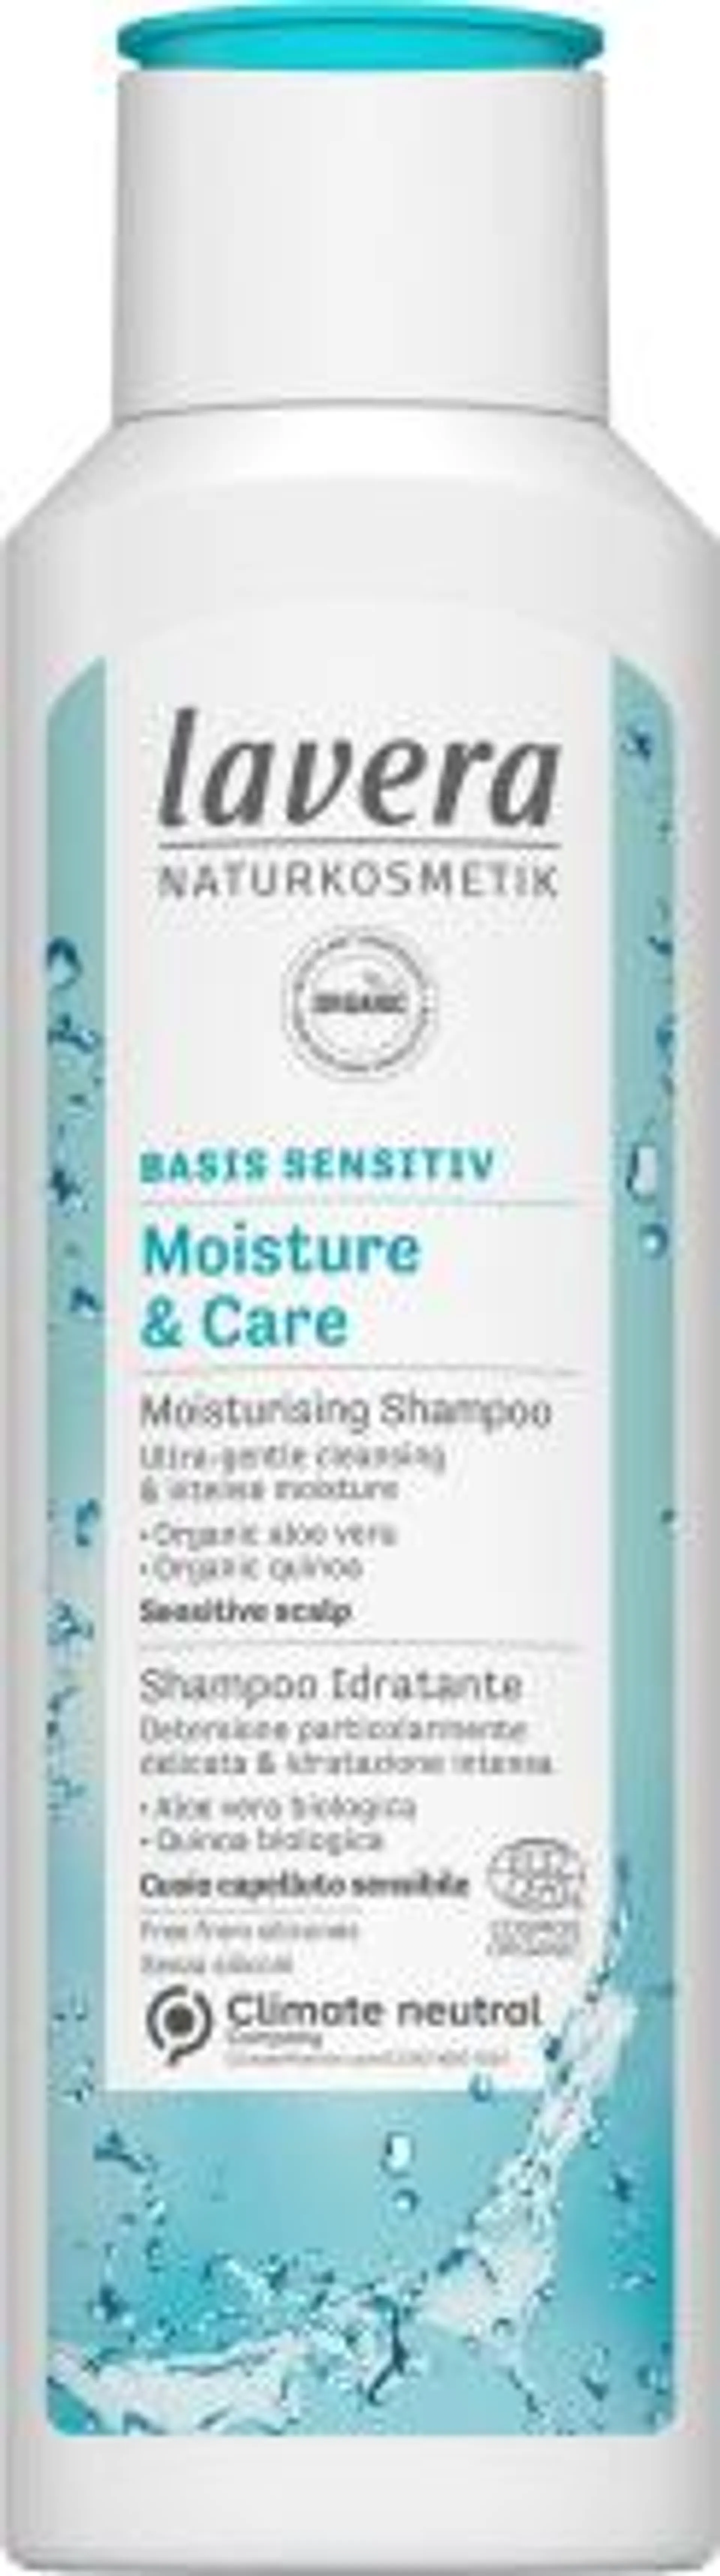 Shampoo idratante Moisture and Care Basis Sensitiv 250 ml